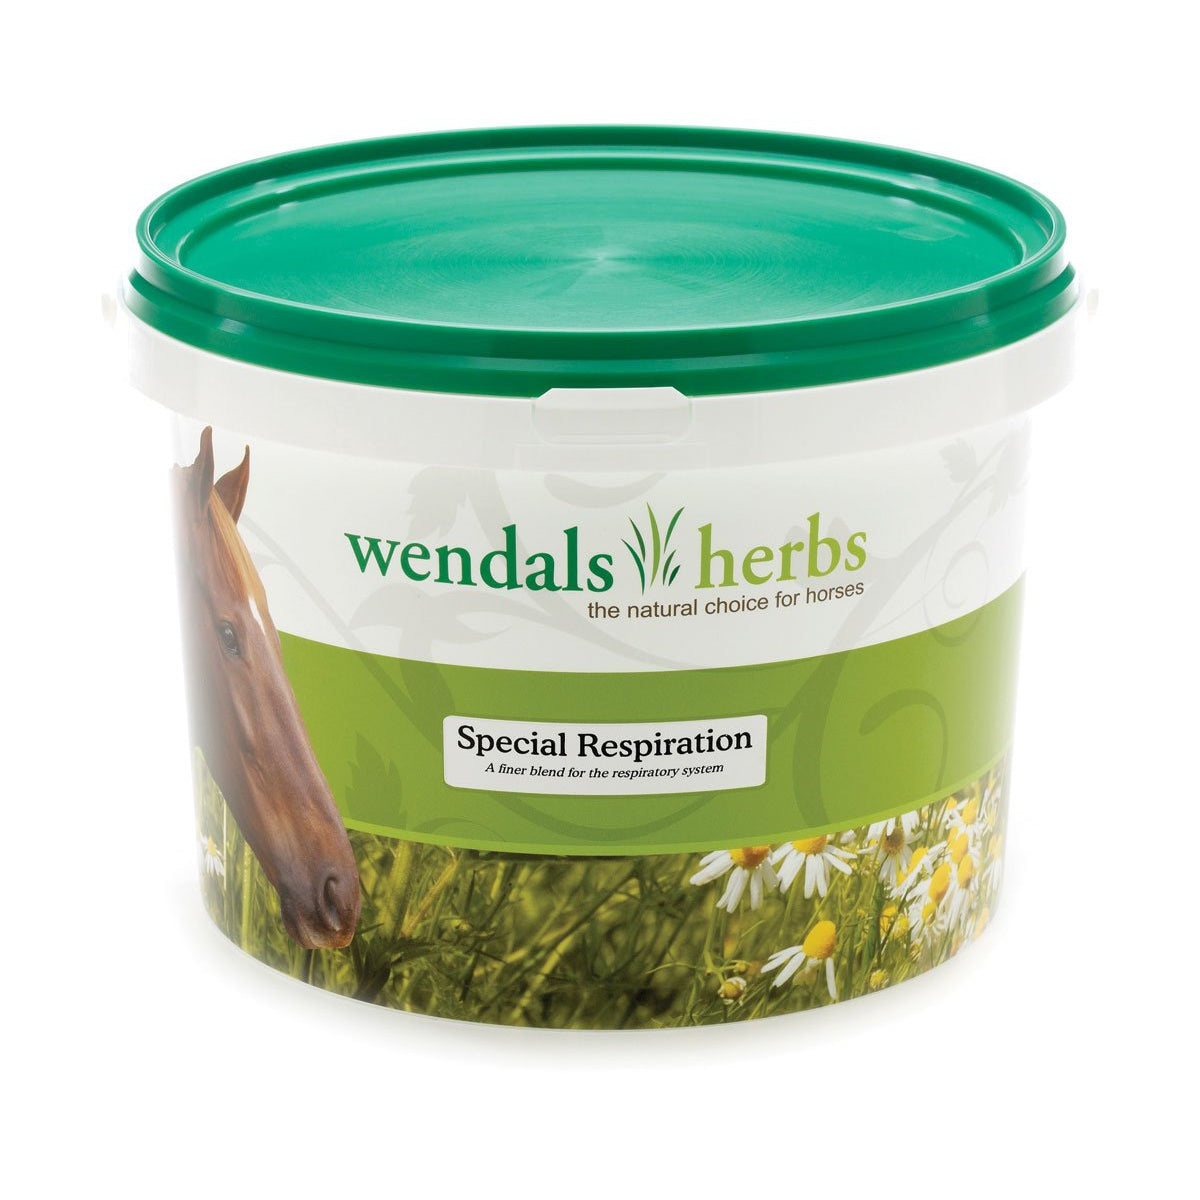 Wendals Herbs Special Respiration